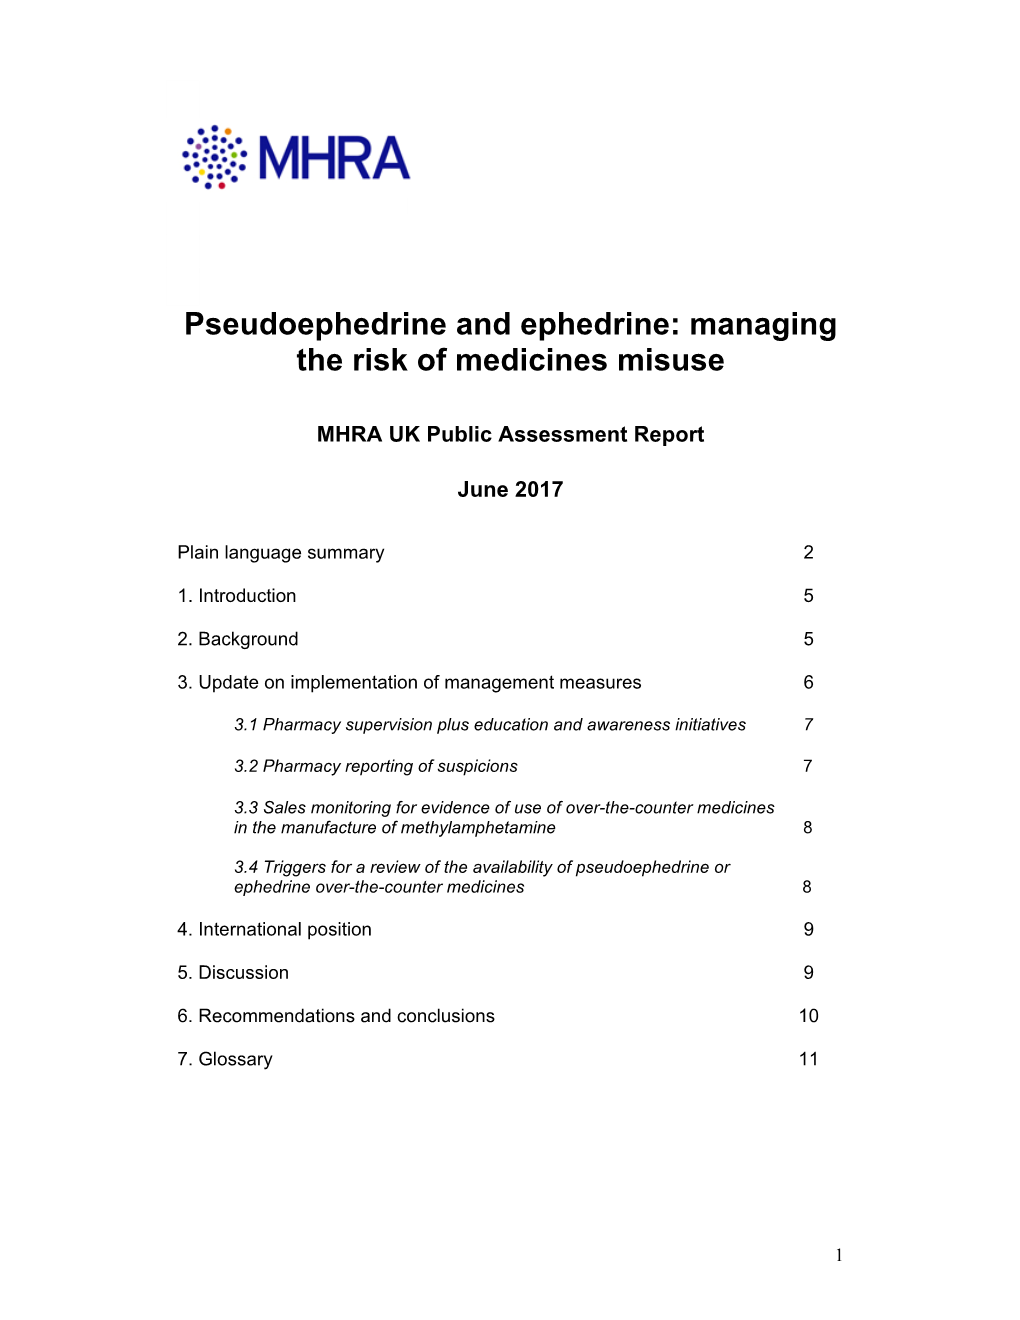 Pseudoephedrine and Ephedrine: Managing the Risk of Medicines Misuse